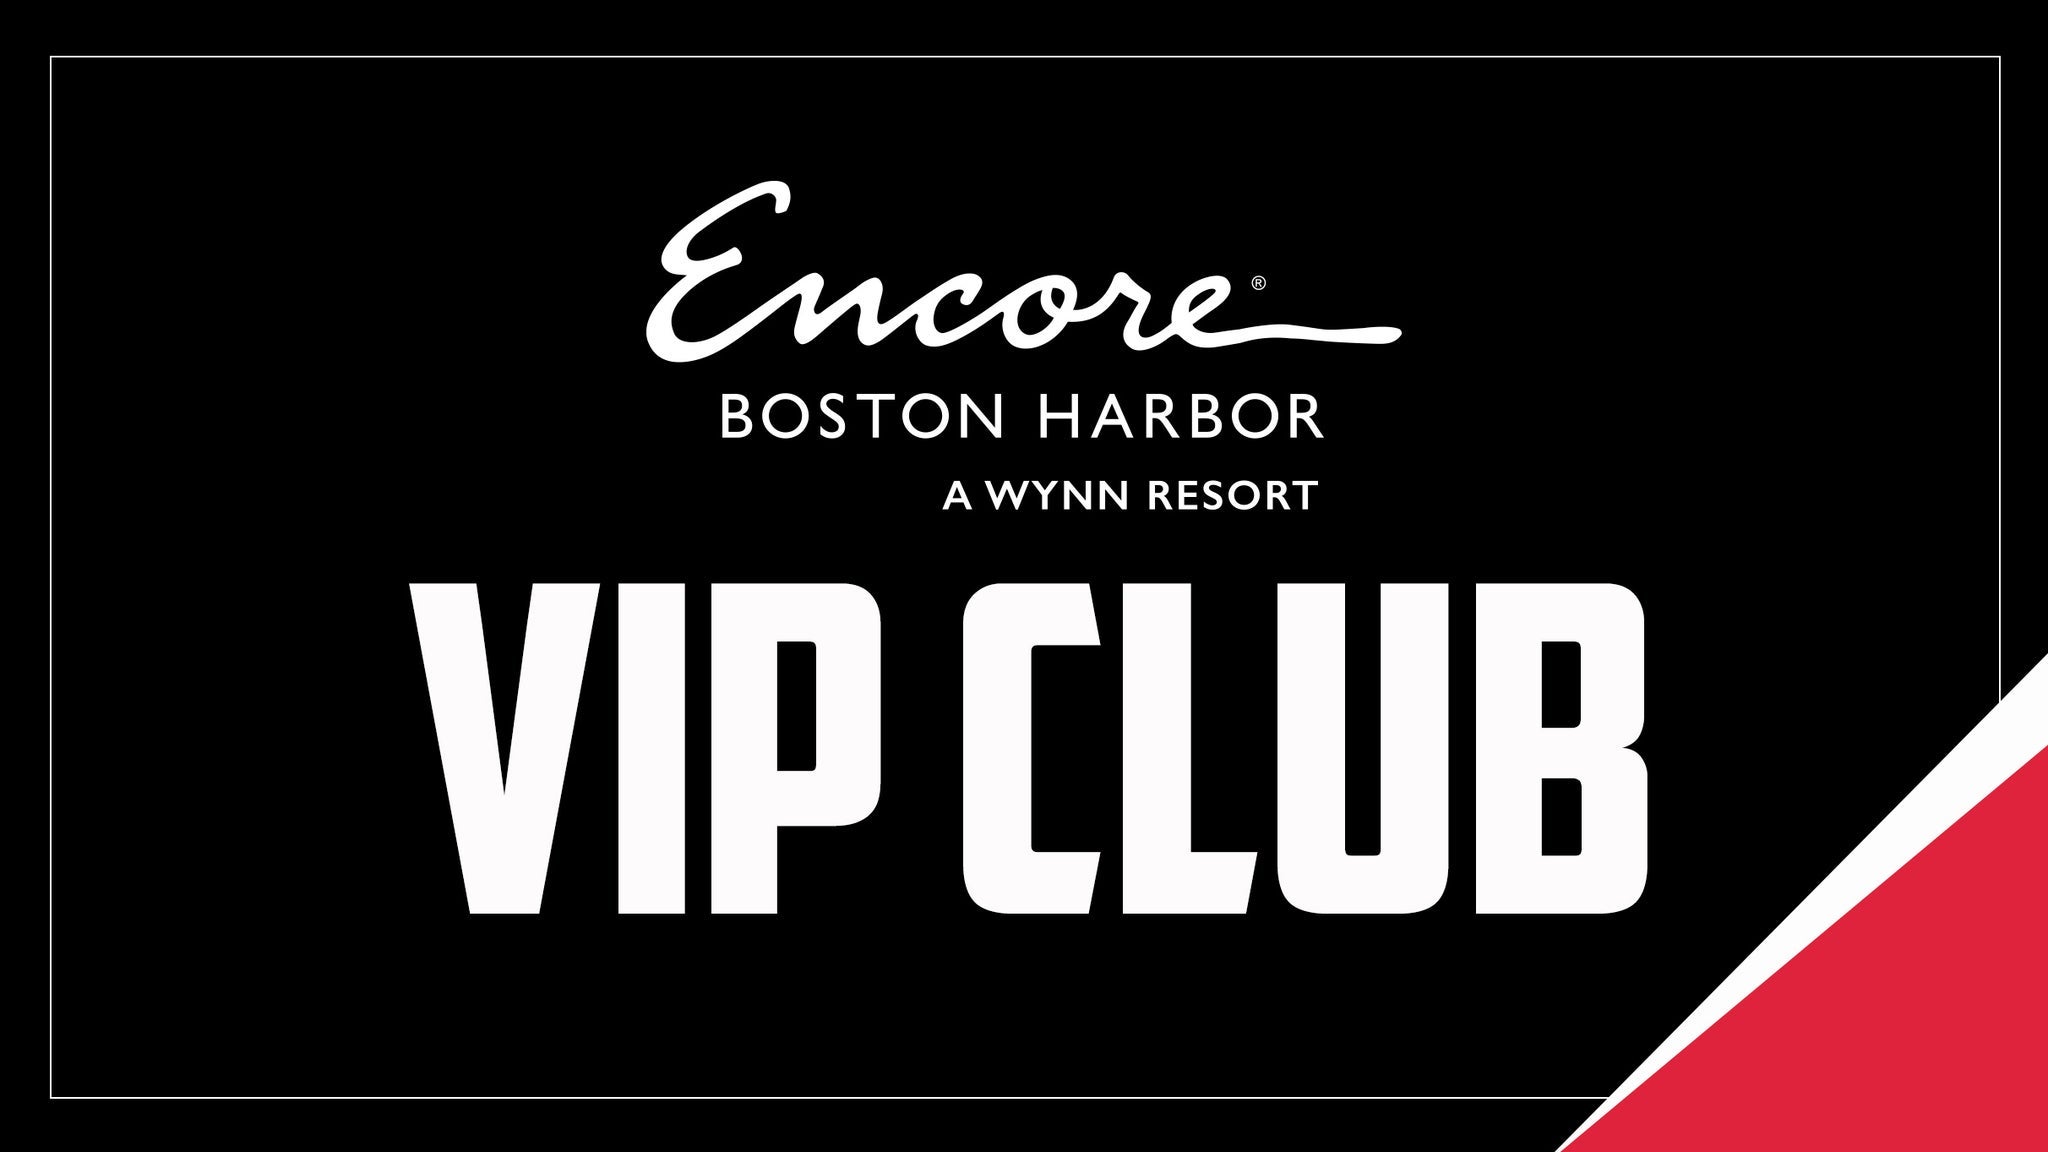 Leader Bank Pavilion Encore Boston Harbor VIP Club presale information on freepresalepasswords.com